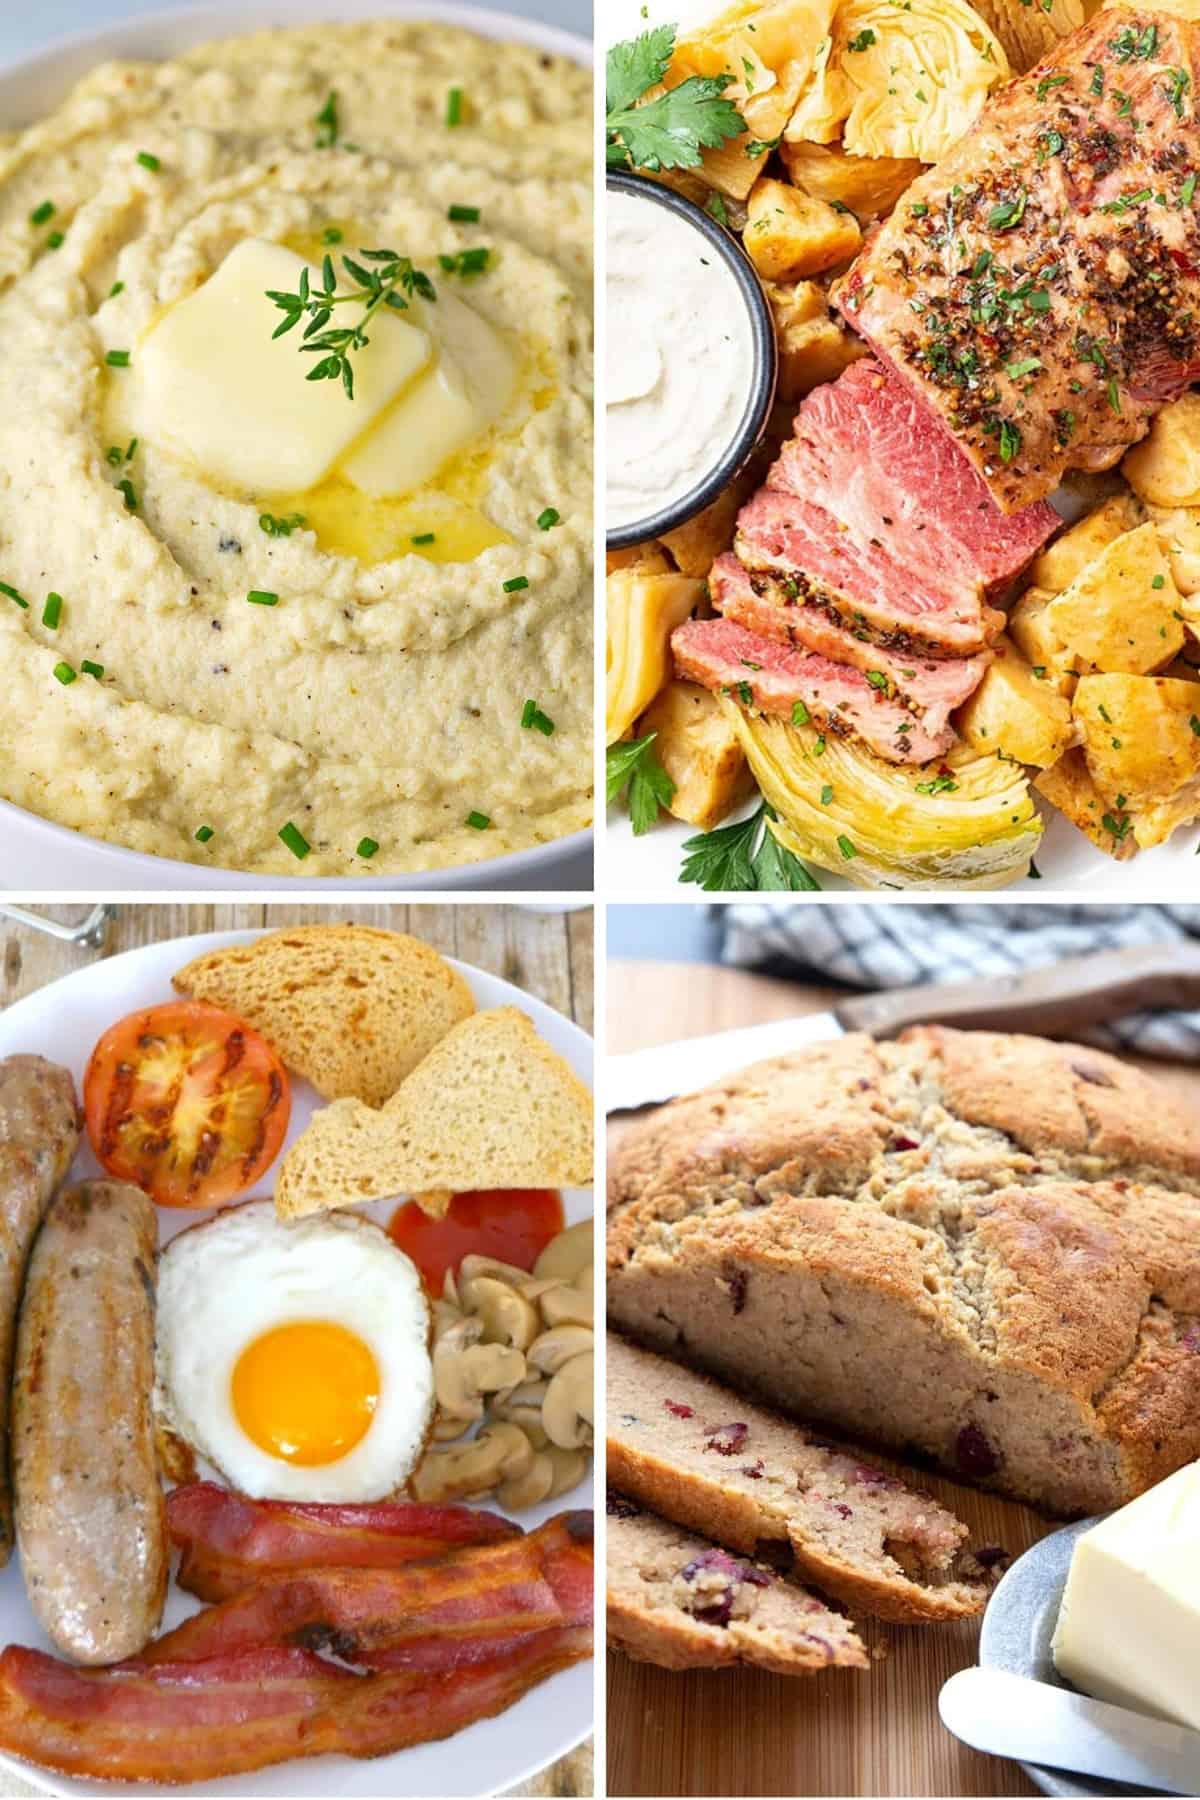 keto st. Patrick's day recipes like English breakfast, cauliflower mashed potatoes, corned beef and cabbage, and Irish soda bread